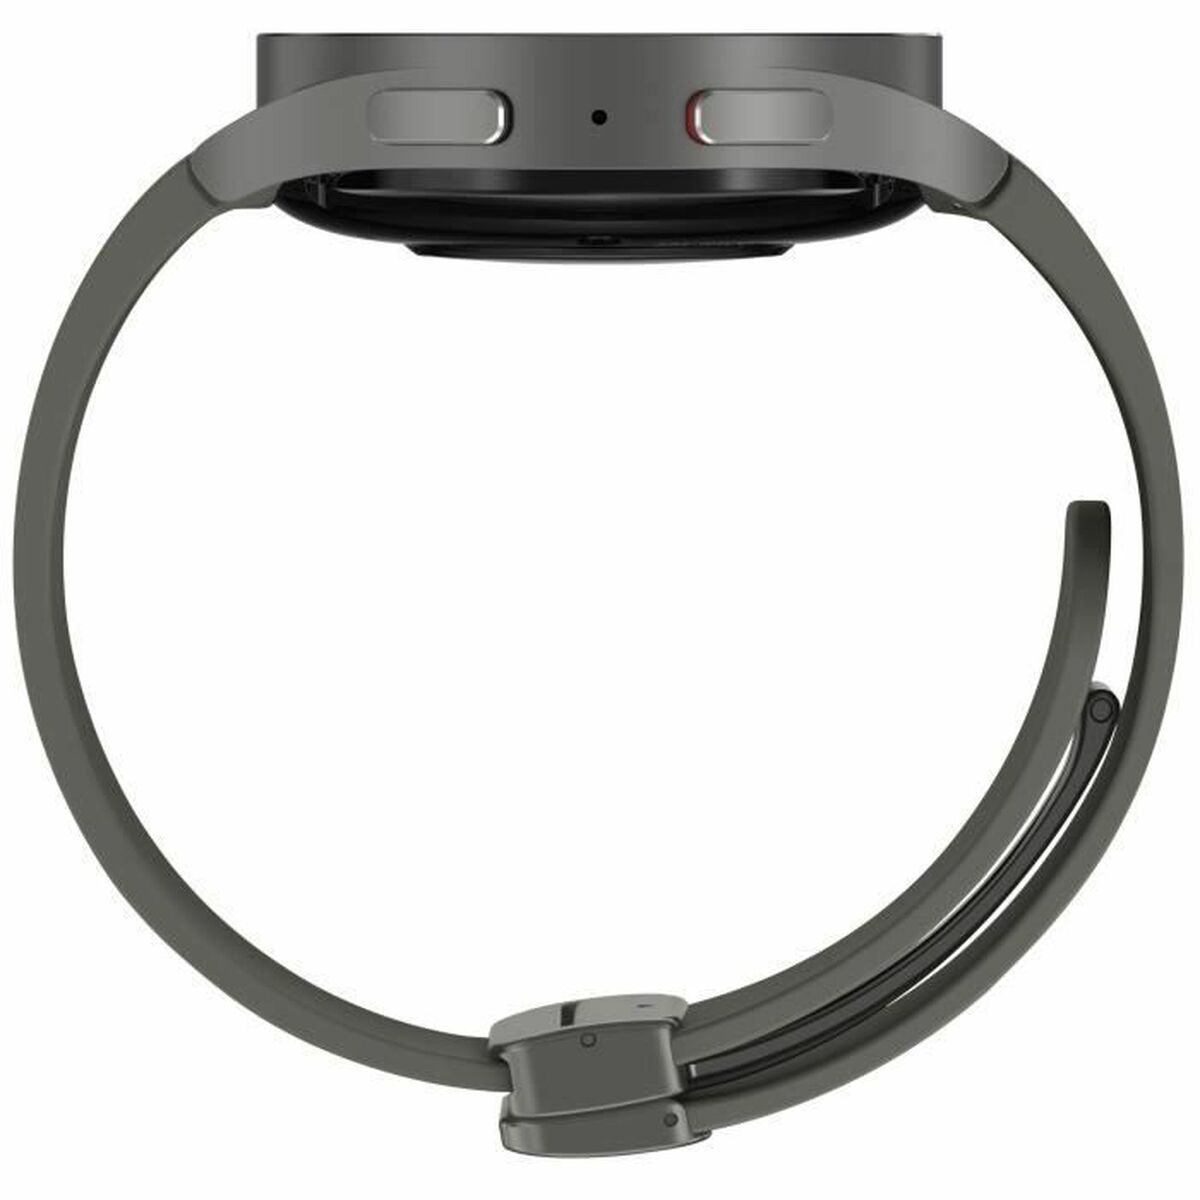 SAMSUNG Watch5 Silver/Black silicone, Smartwatch Pro